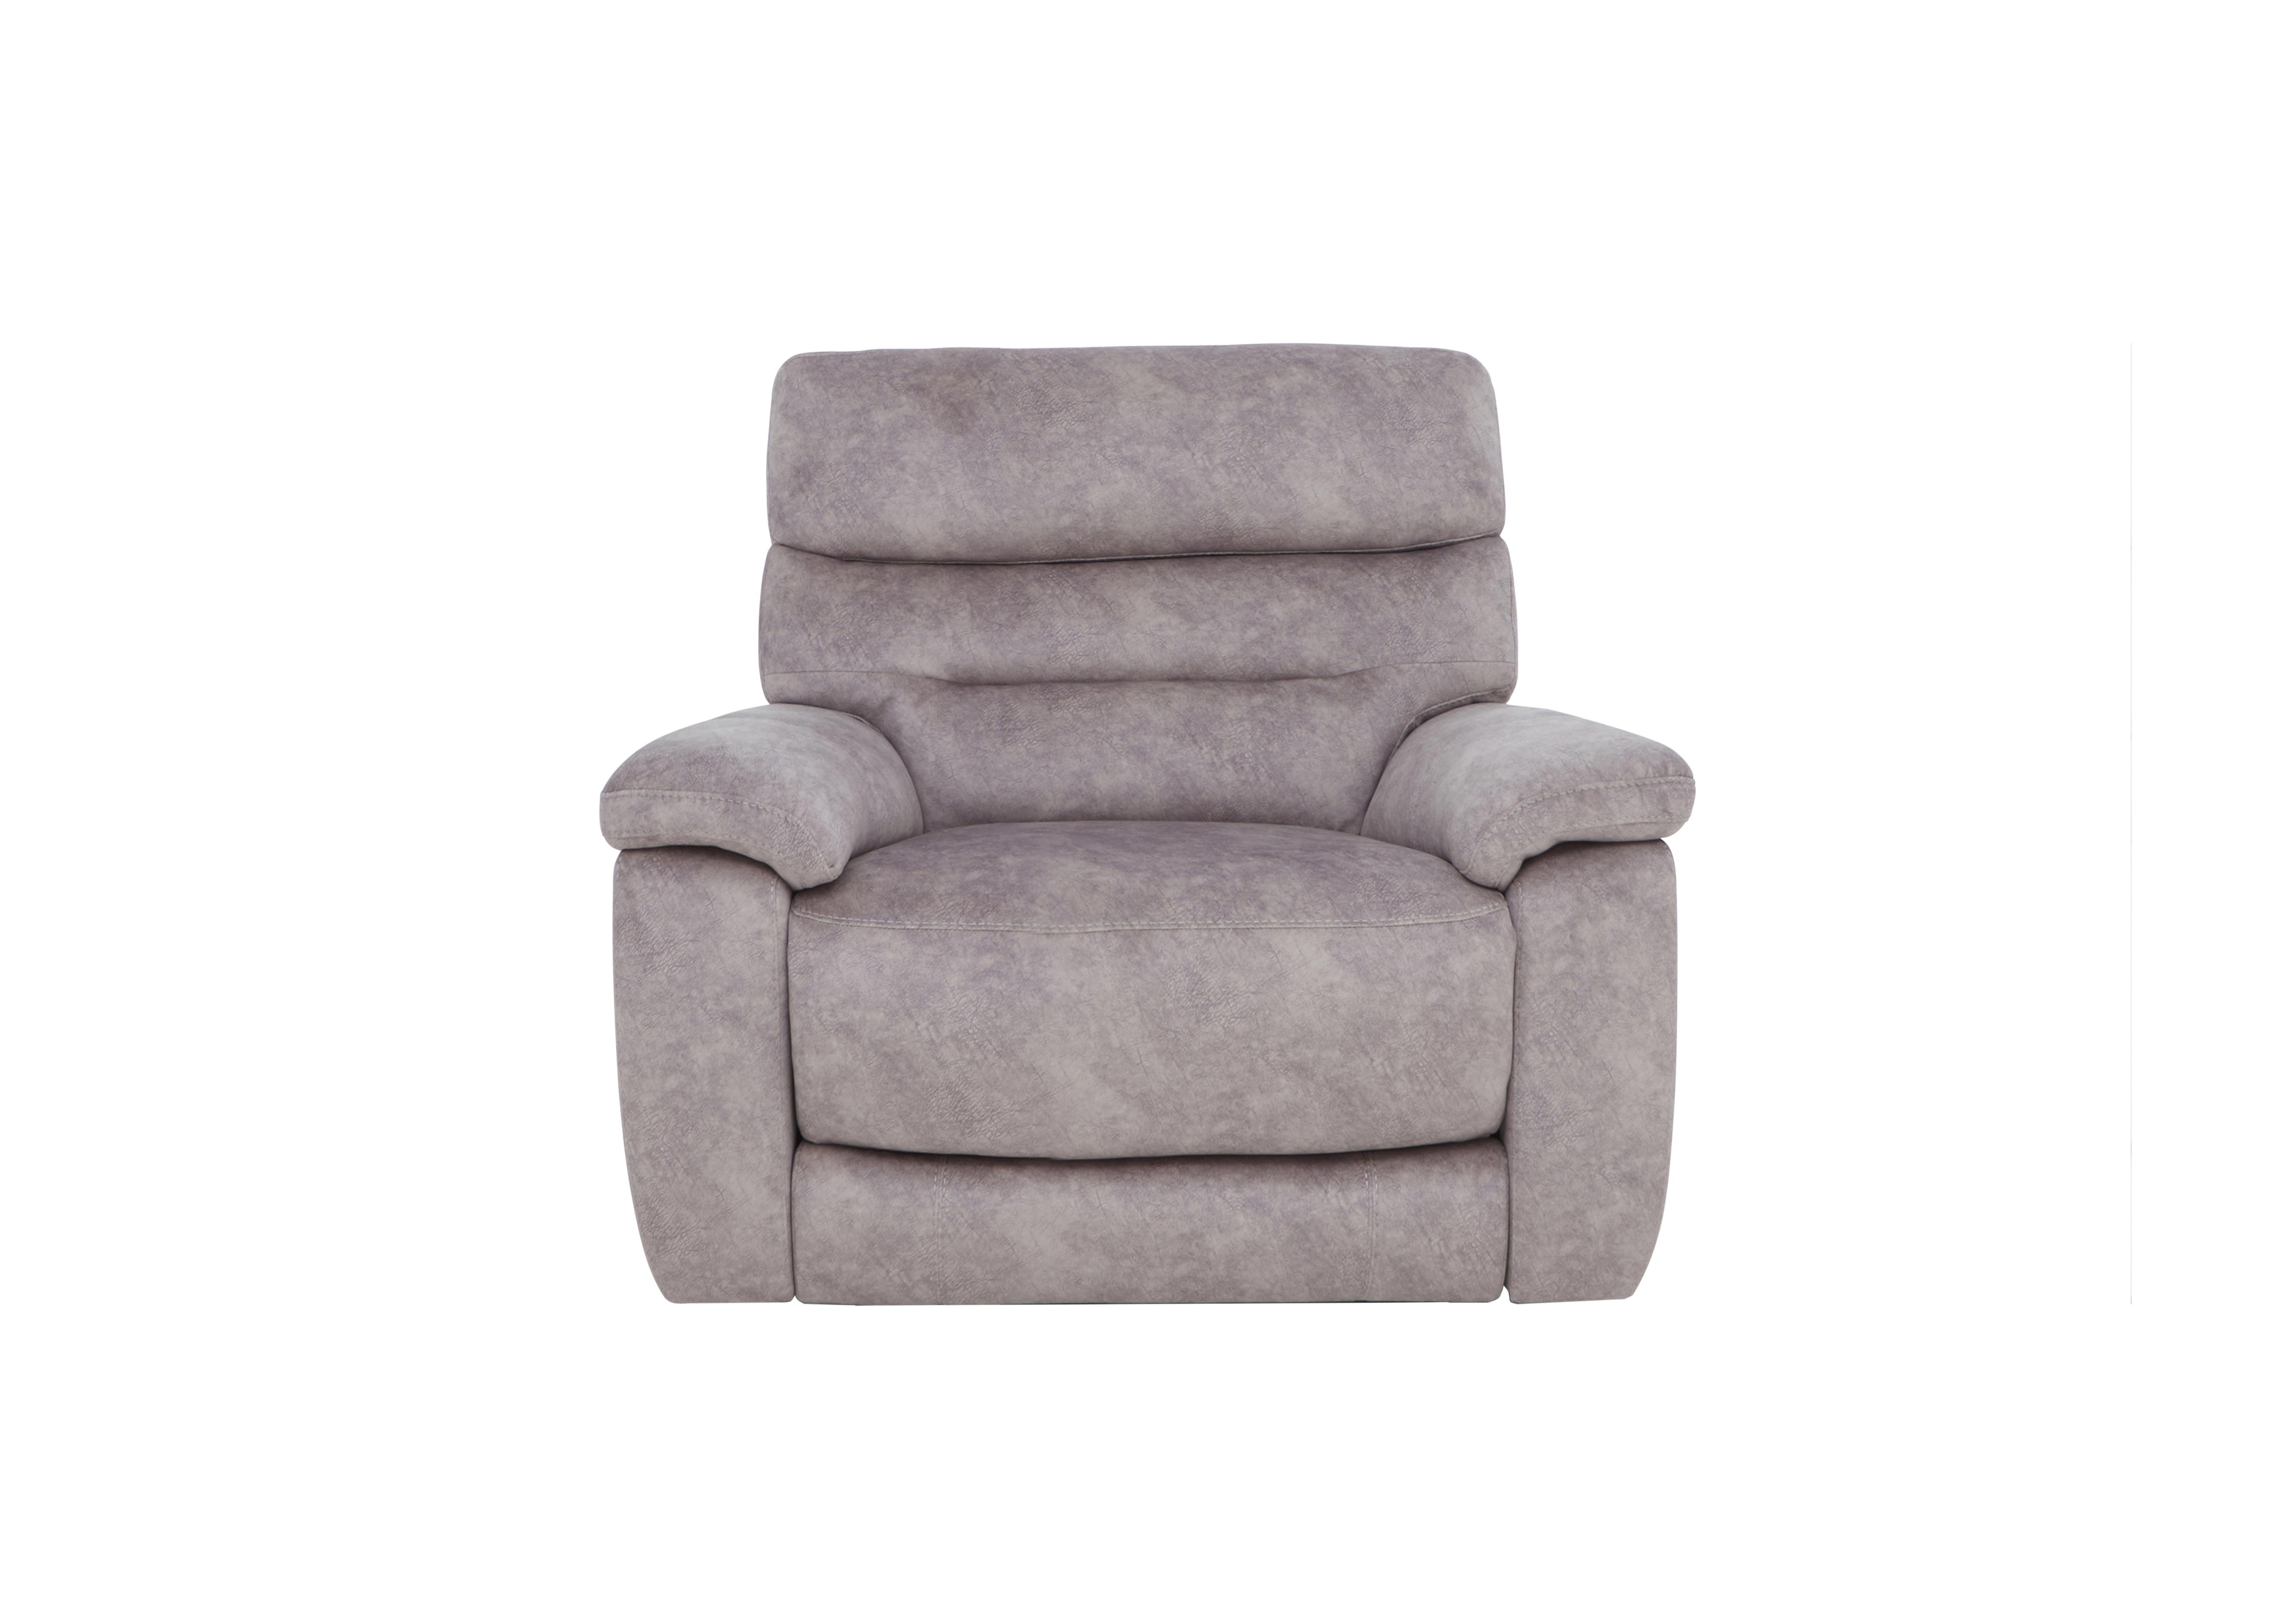 Nimbus Fabric Power Recliner Chair with Power Headrest in Bfa-Bnn-R28 Grey on Furniture Village